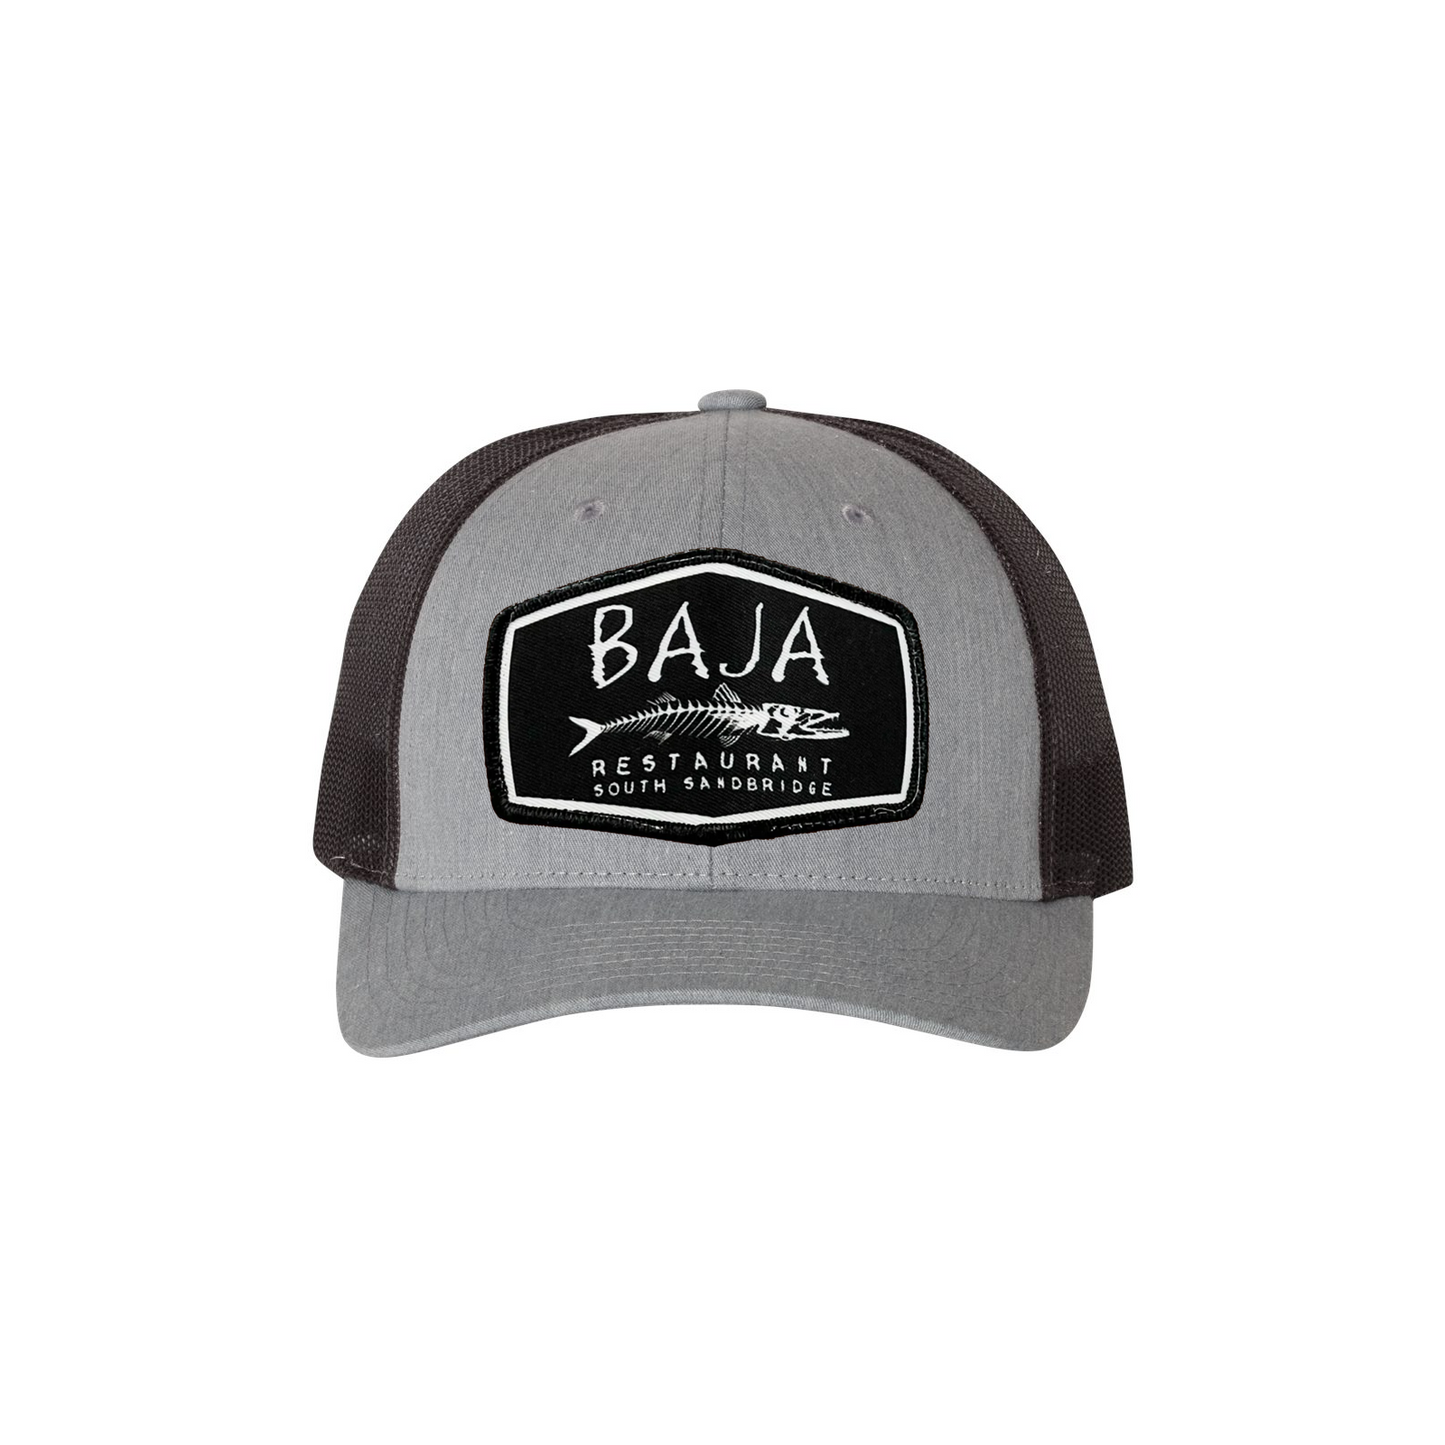 Baja Restaurant (Applique Embroidered Patch) - Trucker Hat (Richardson 115 - Heather Grey/Dark Charcoal)